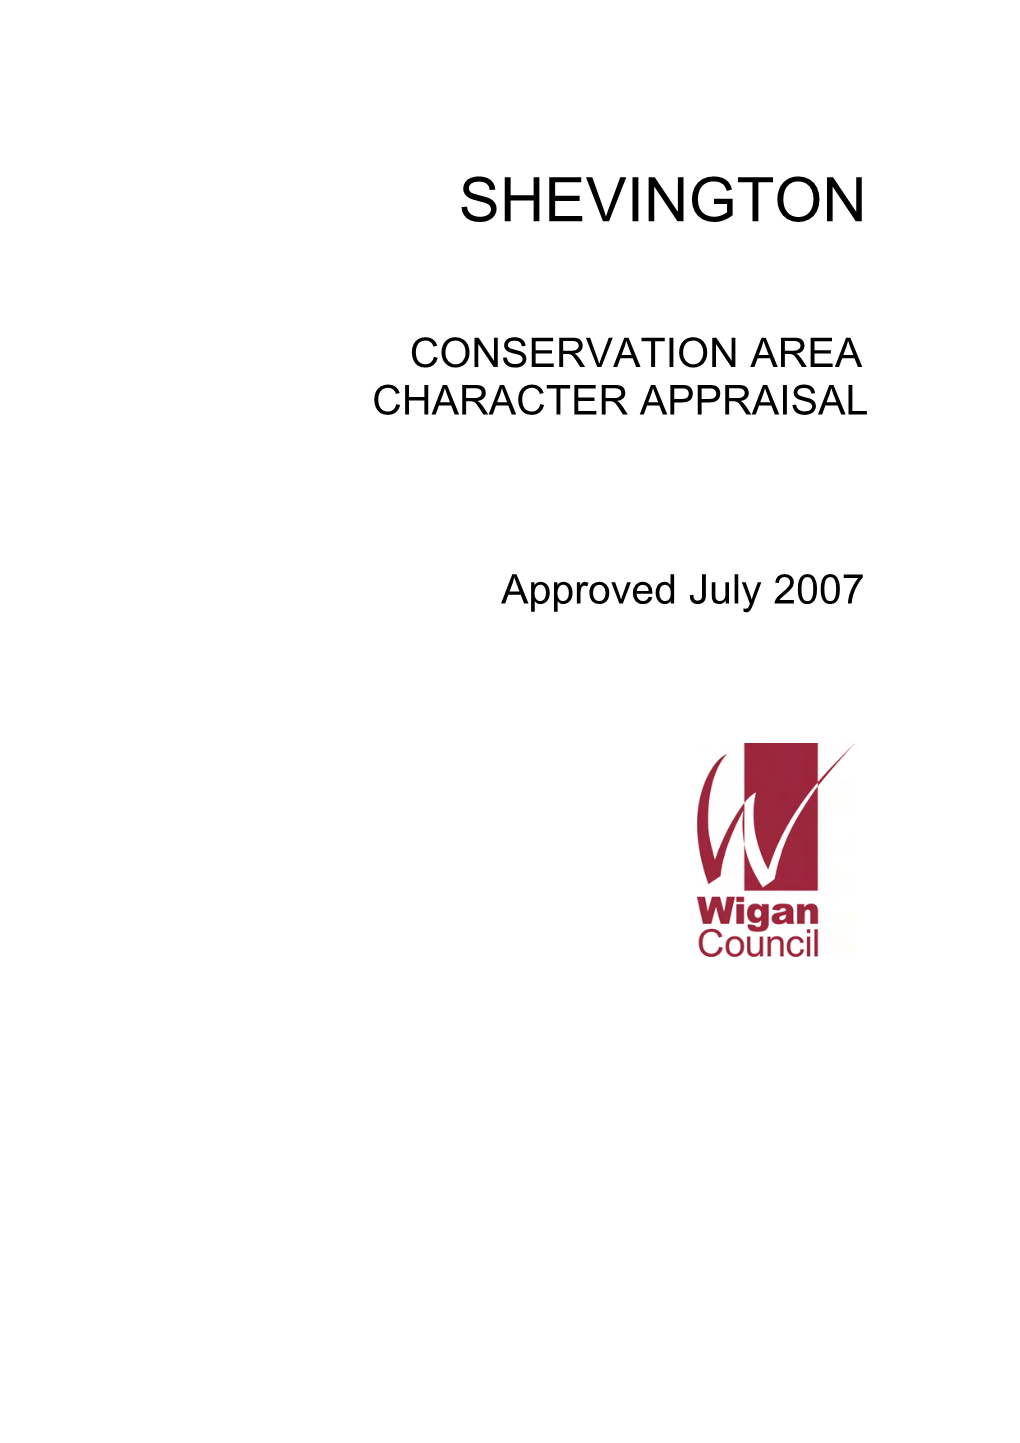 Shevington Conservation Area Appraisal